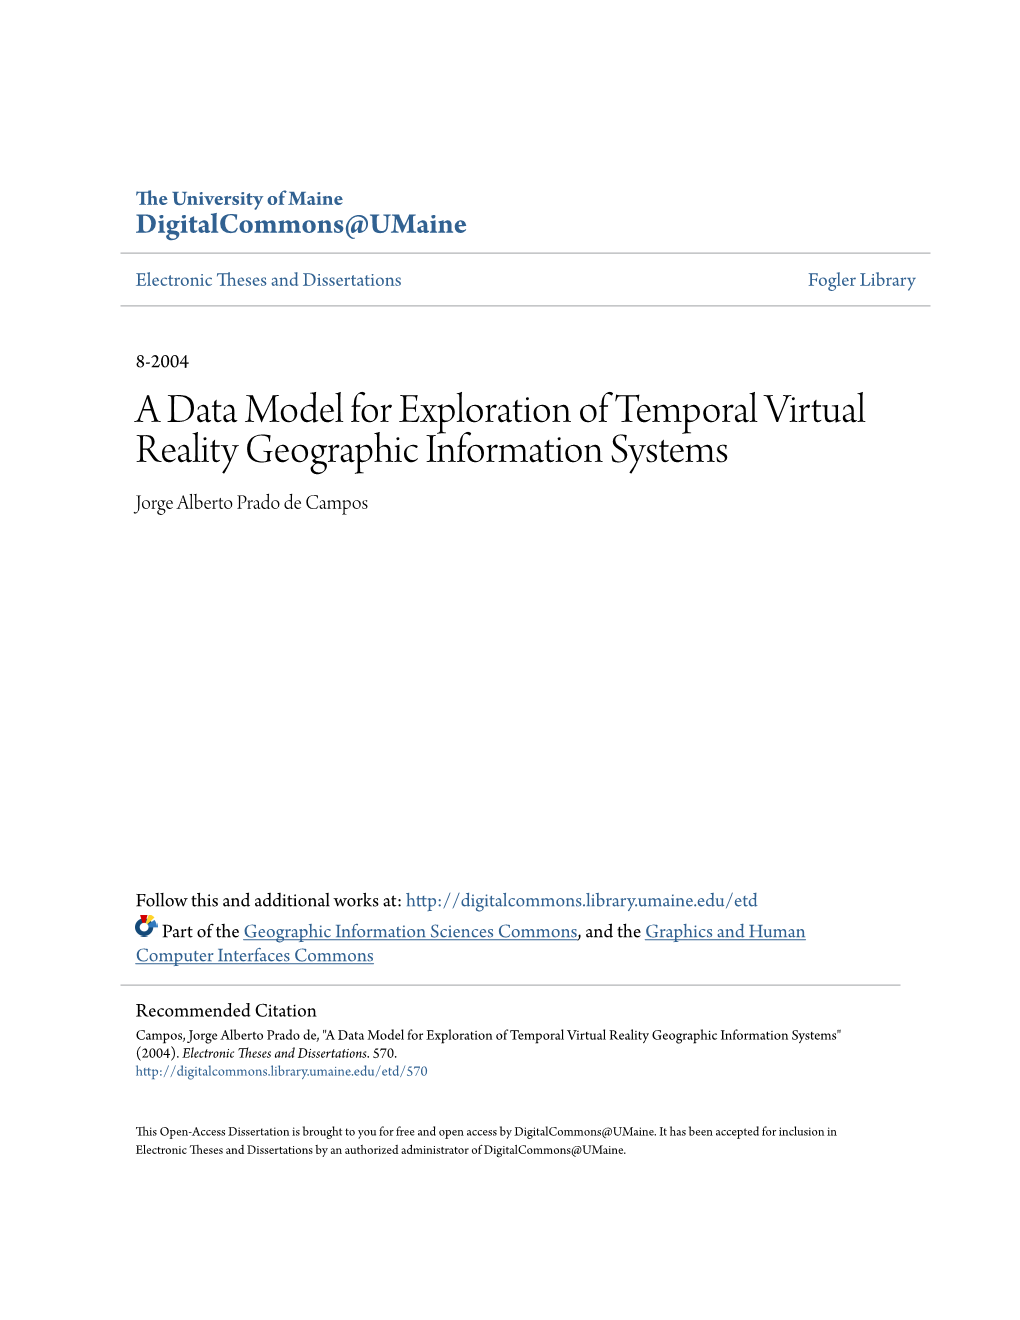 A Data Model for Exploration of Temporal Virtual Reality Geographic Information Systems Jorge Alberto Prado De Campos